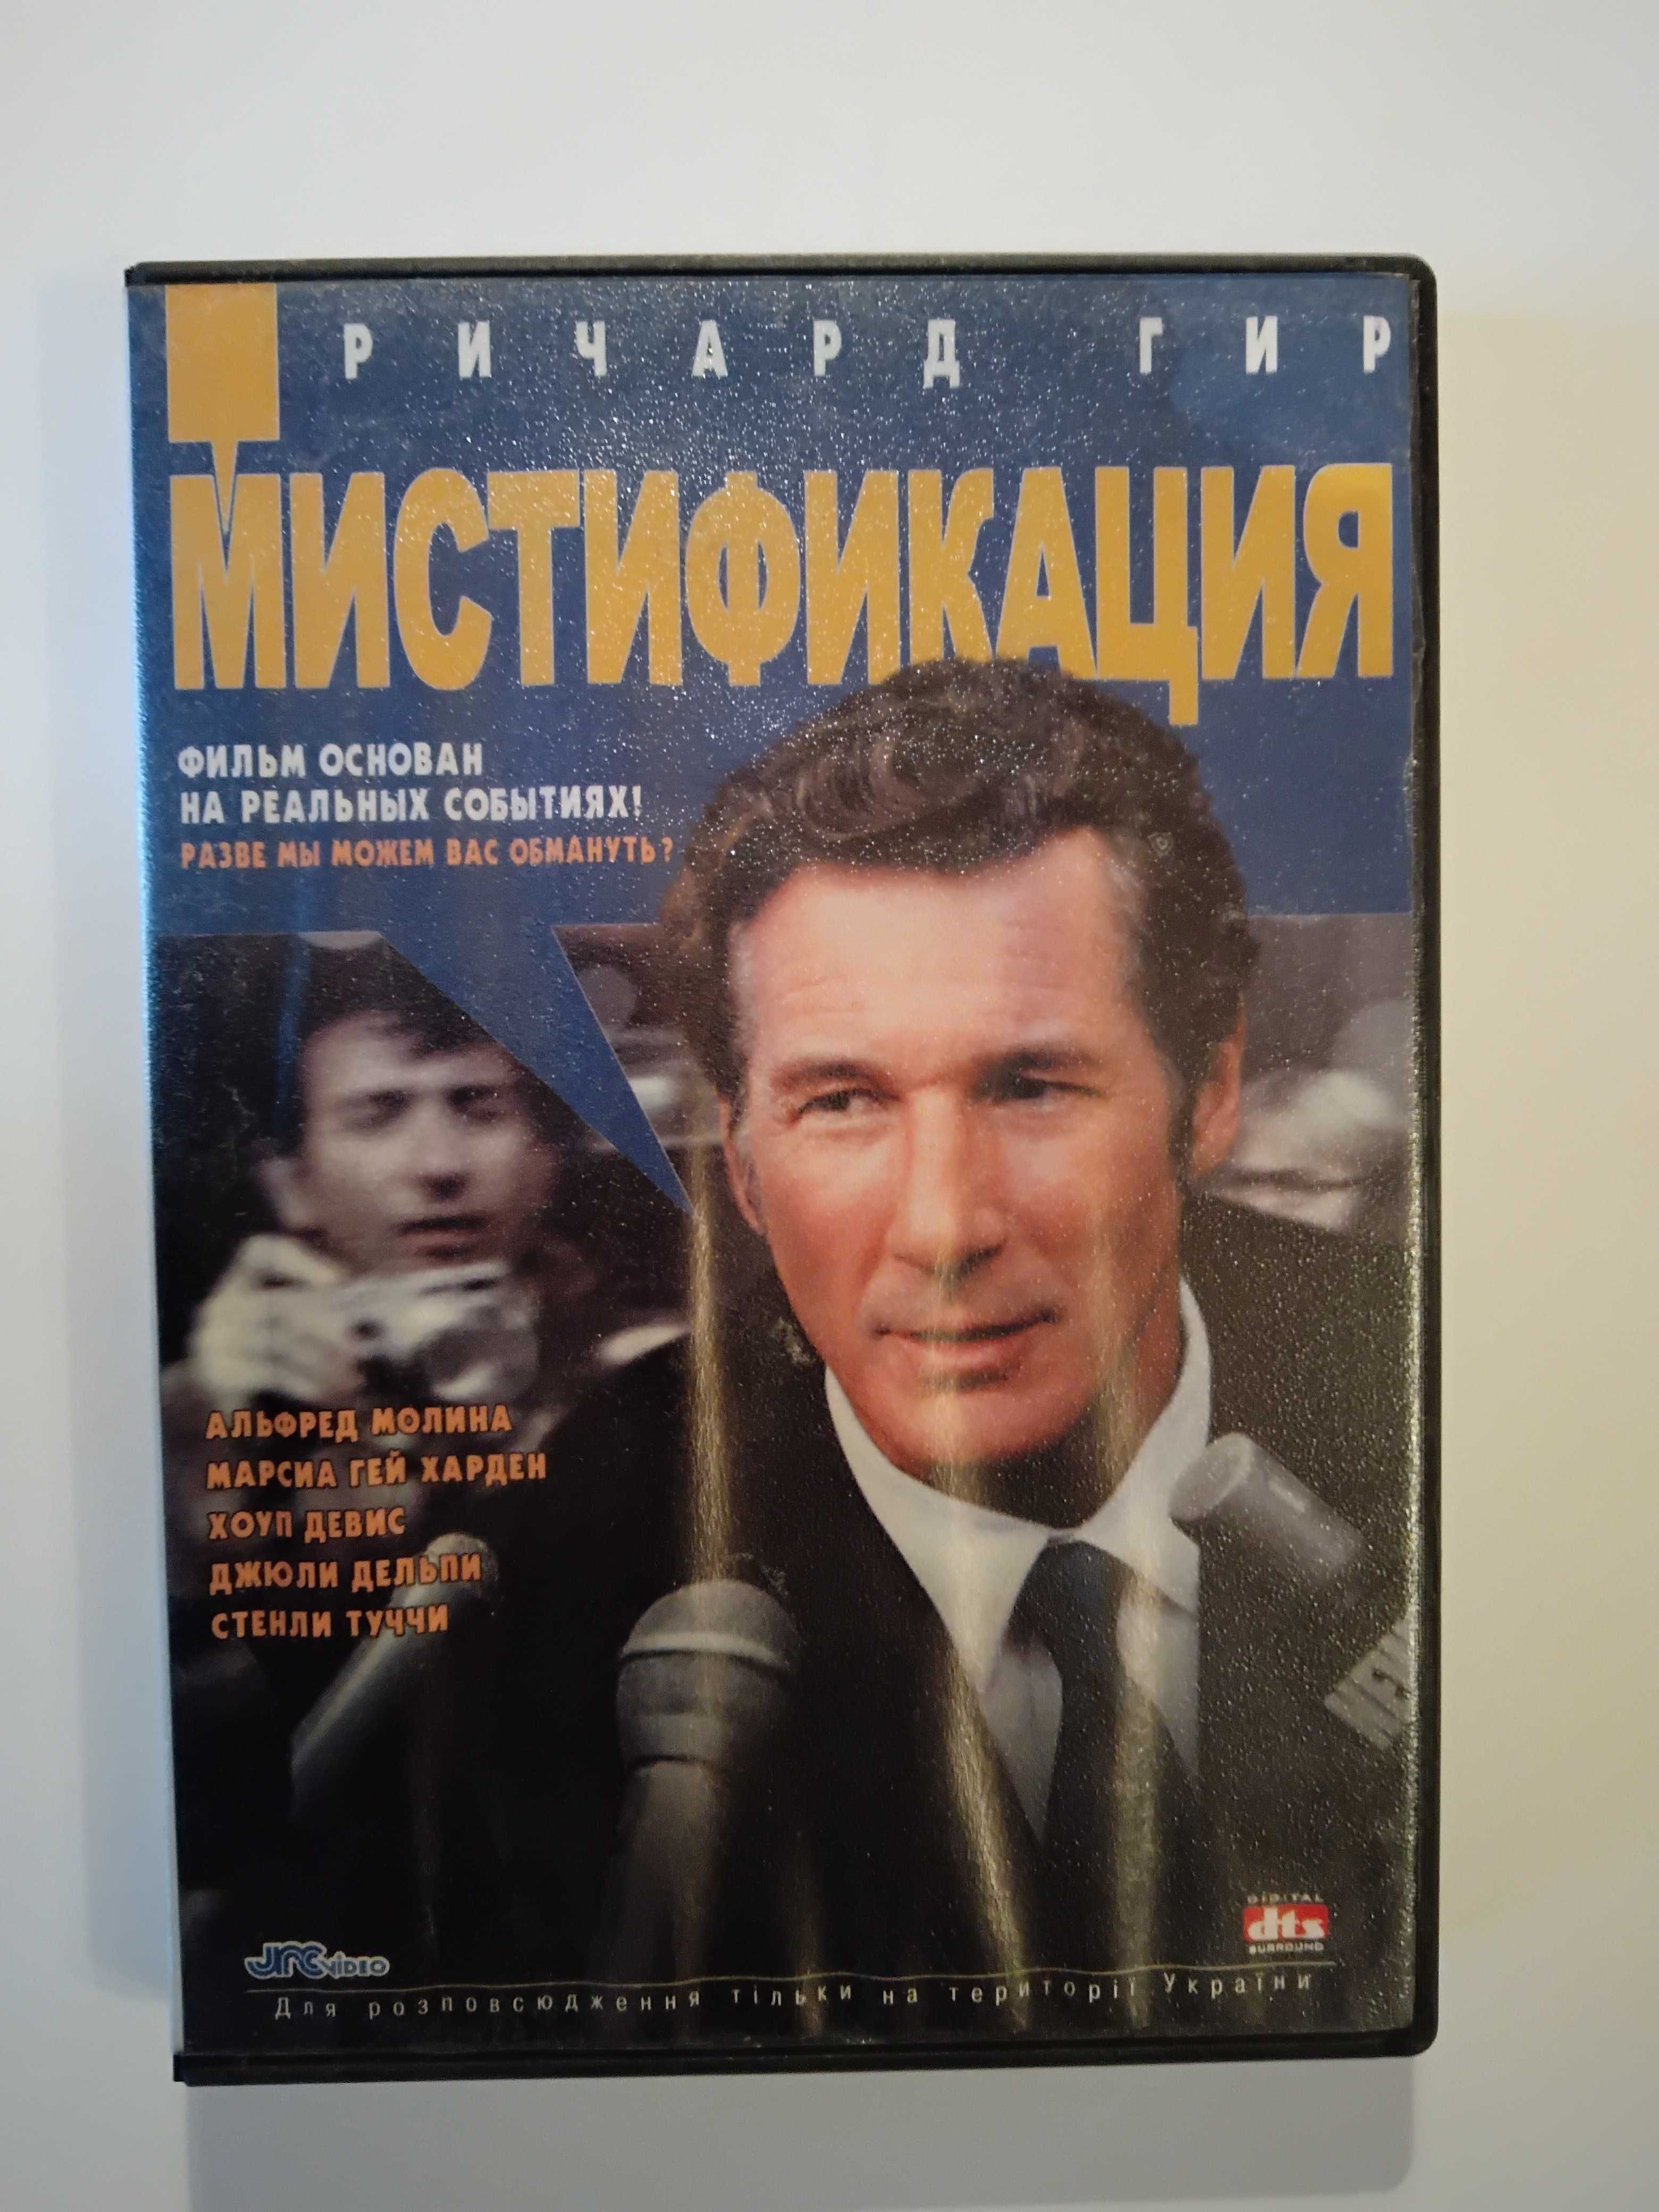 Мистификация , авантюрная комедия , Ричард Гир , видео-DVD-диск .